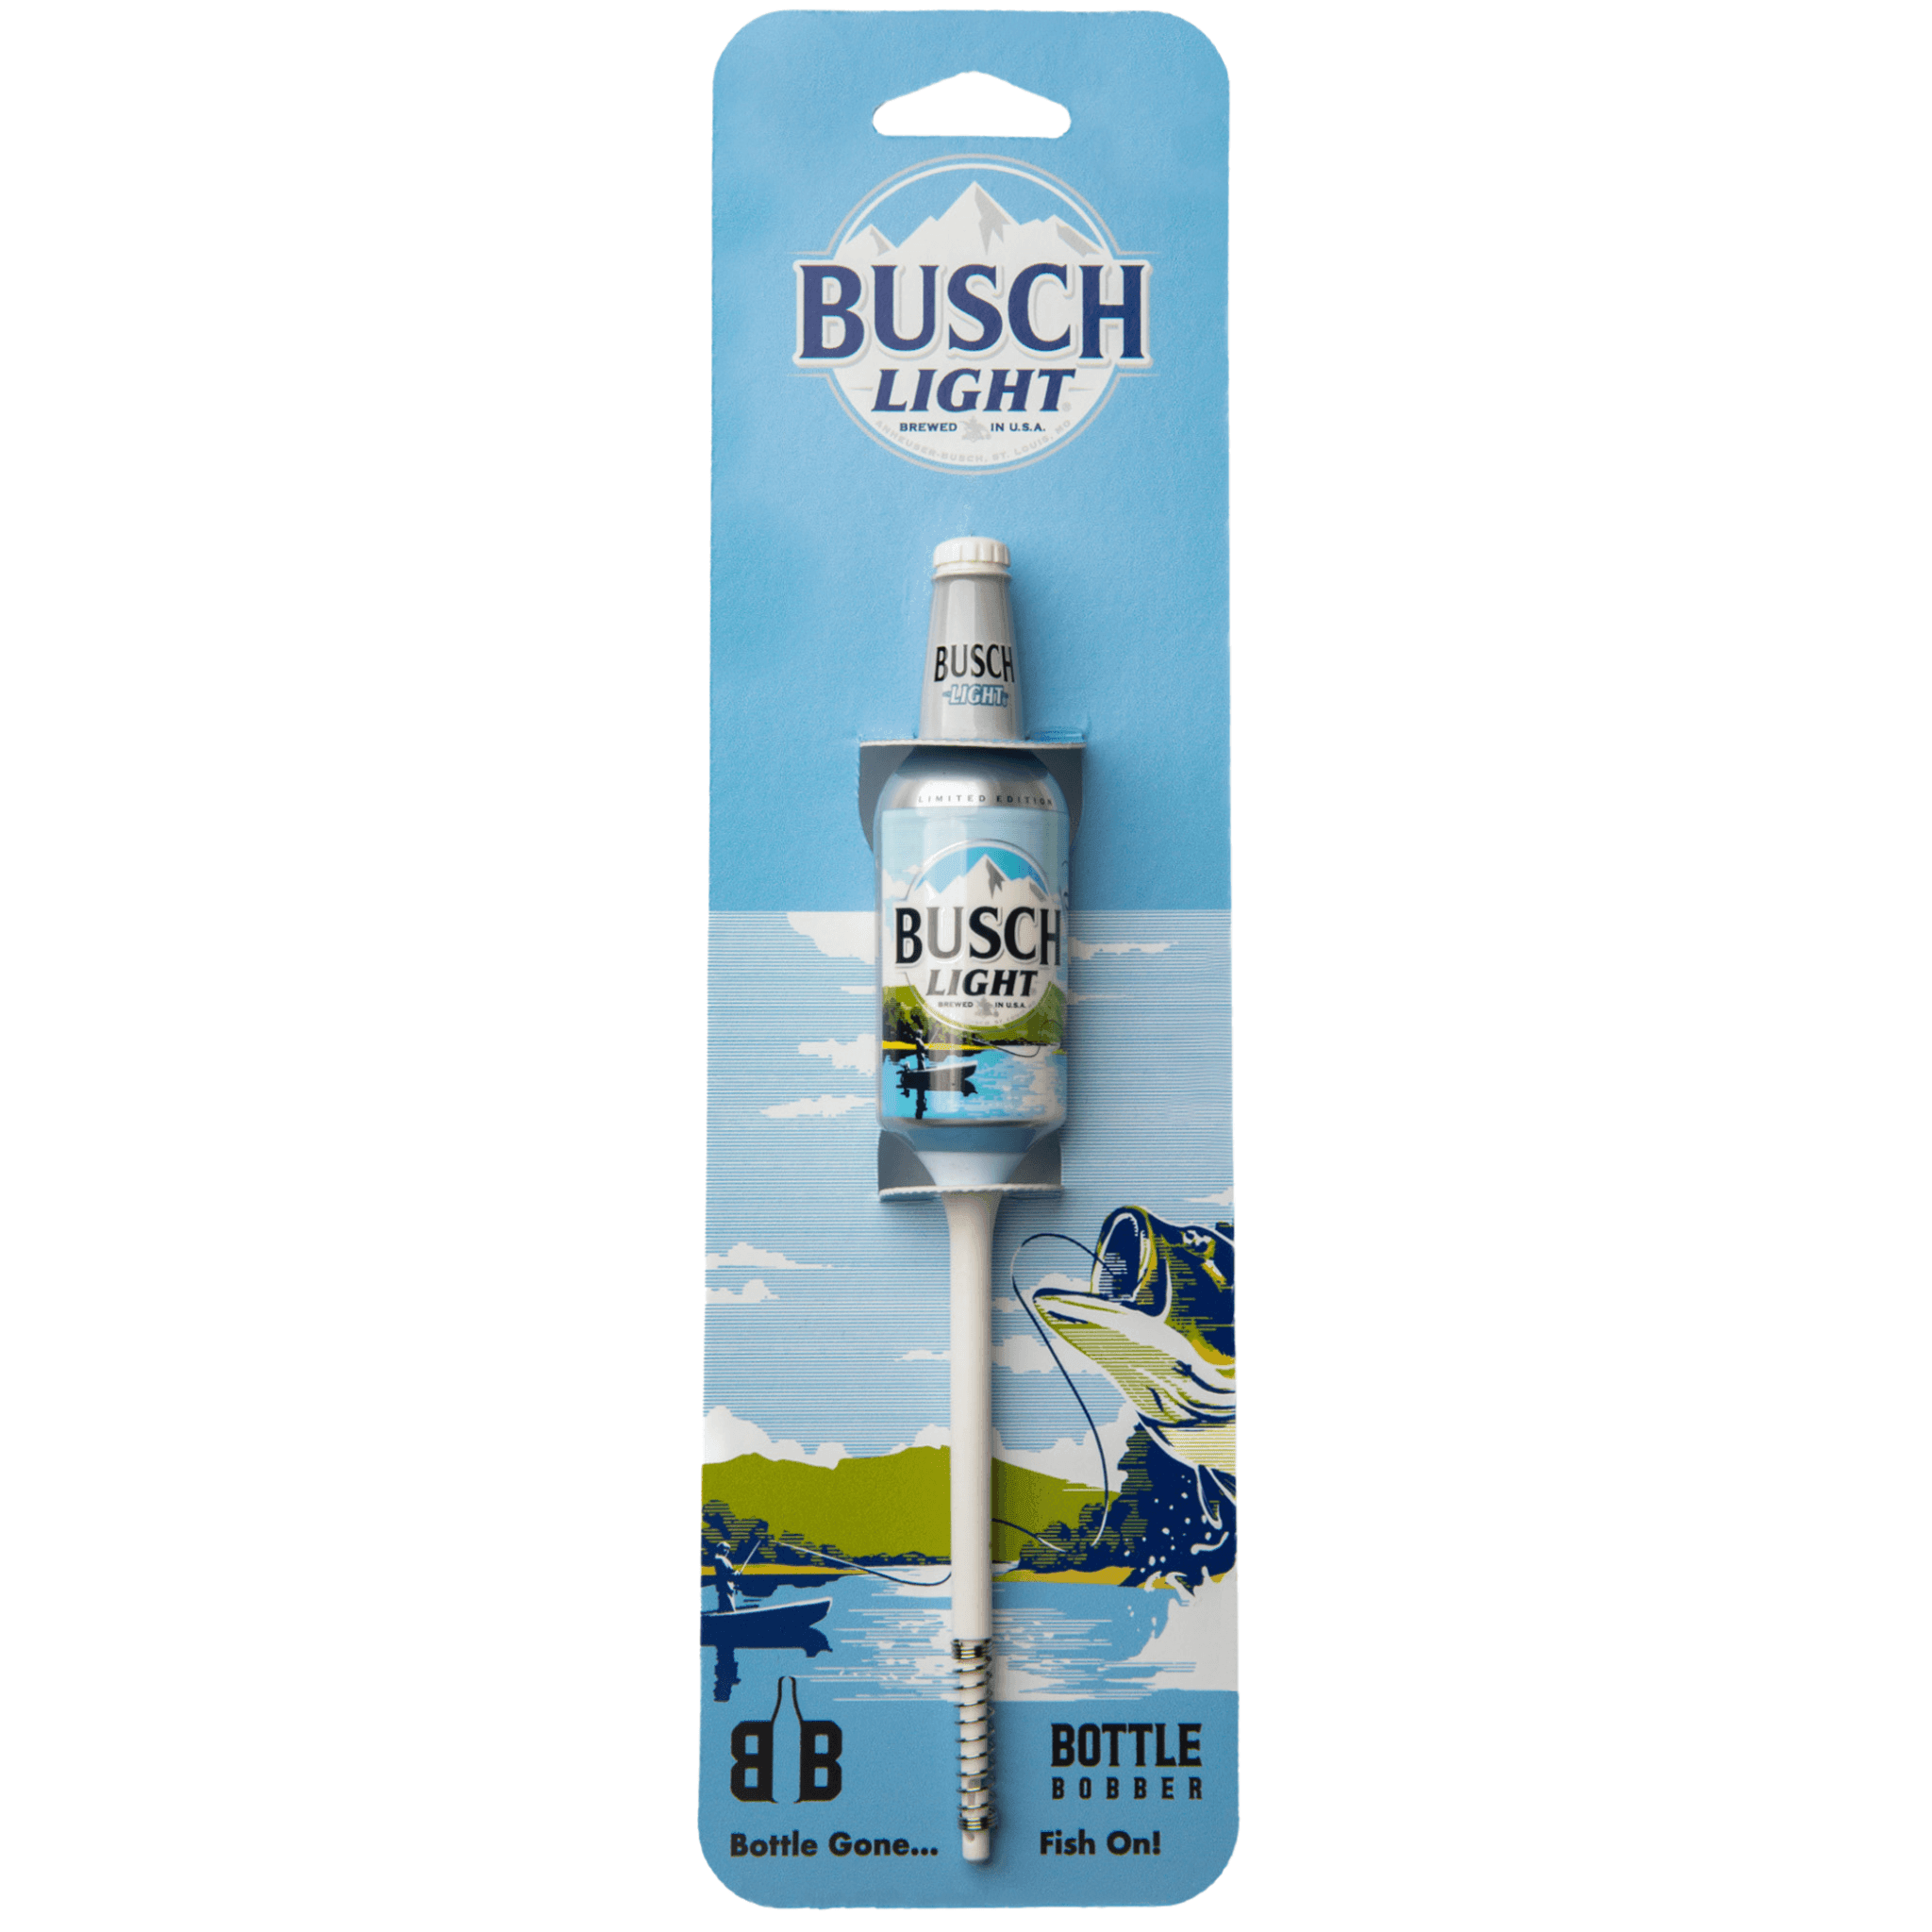 Busch Light Bottle Bobber